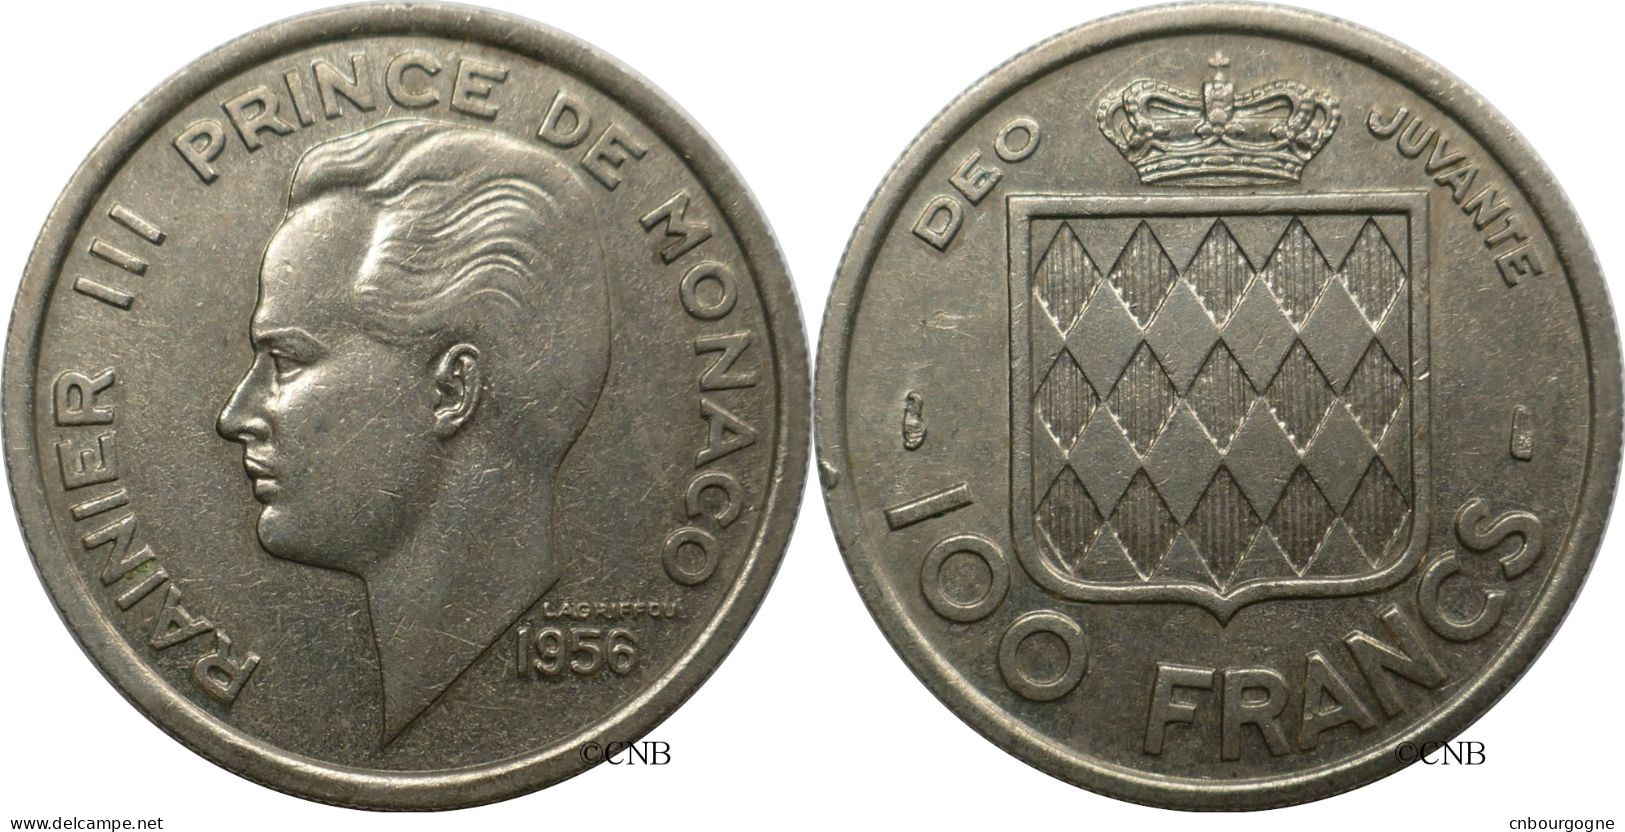 Monaco - Principauté - Rainier III - 100 Francs 1956 - TTB/XF45 - Mon6786 - 1949-1956 Oude Frank